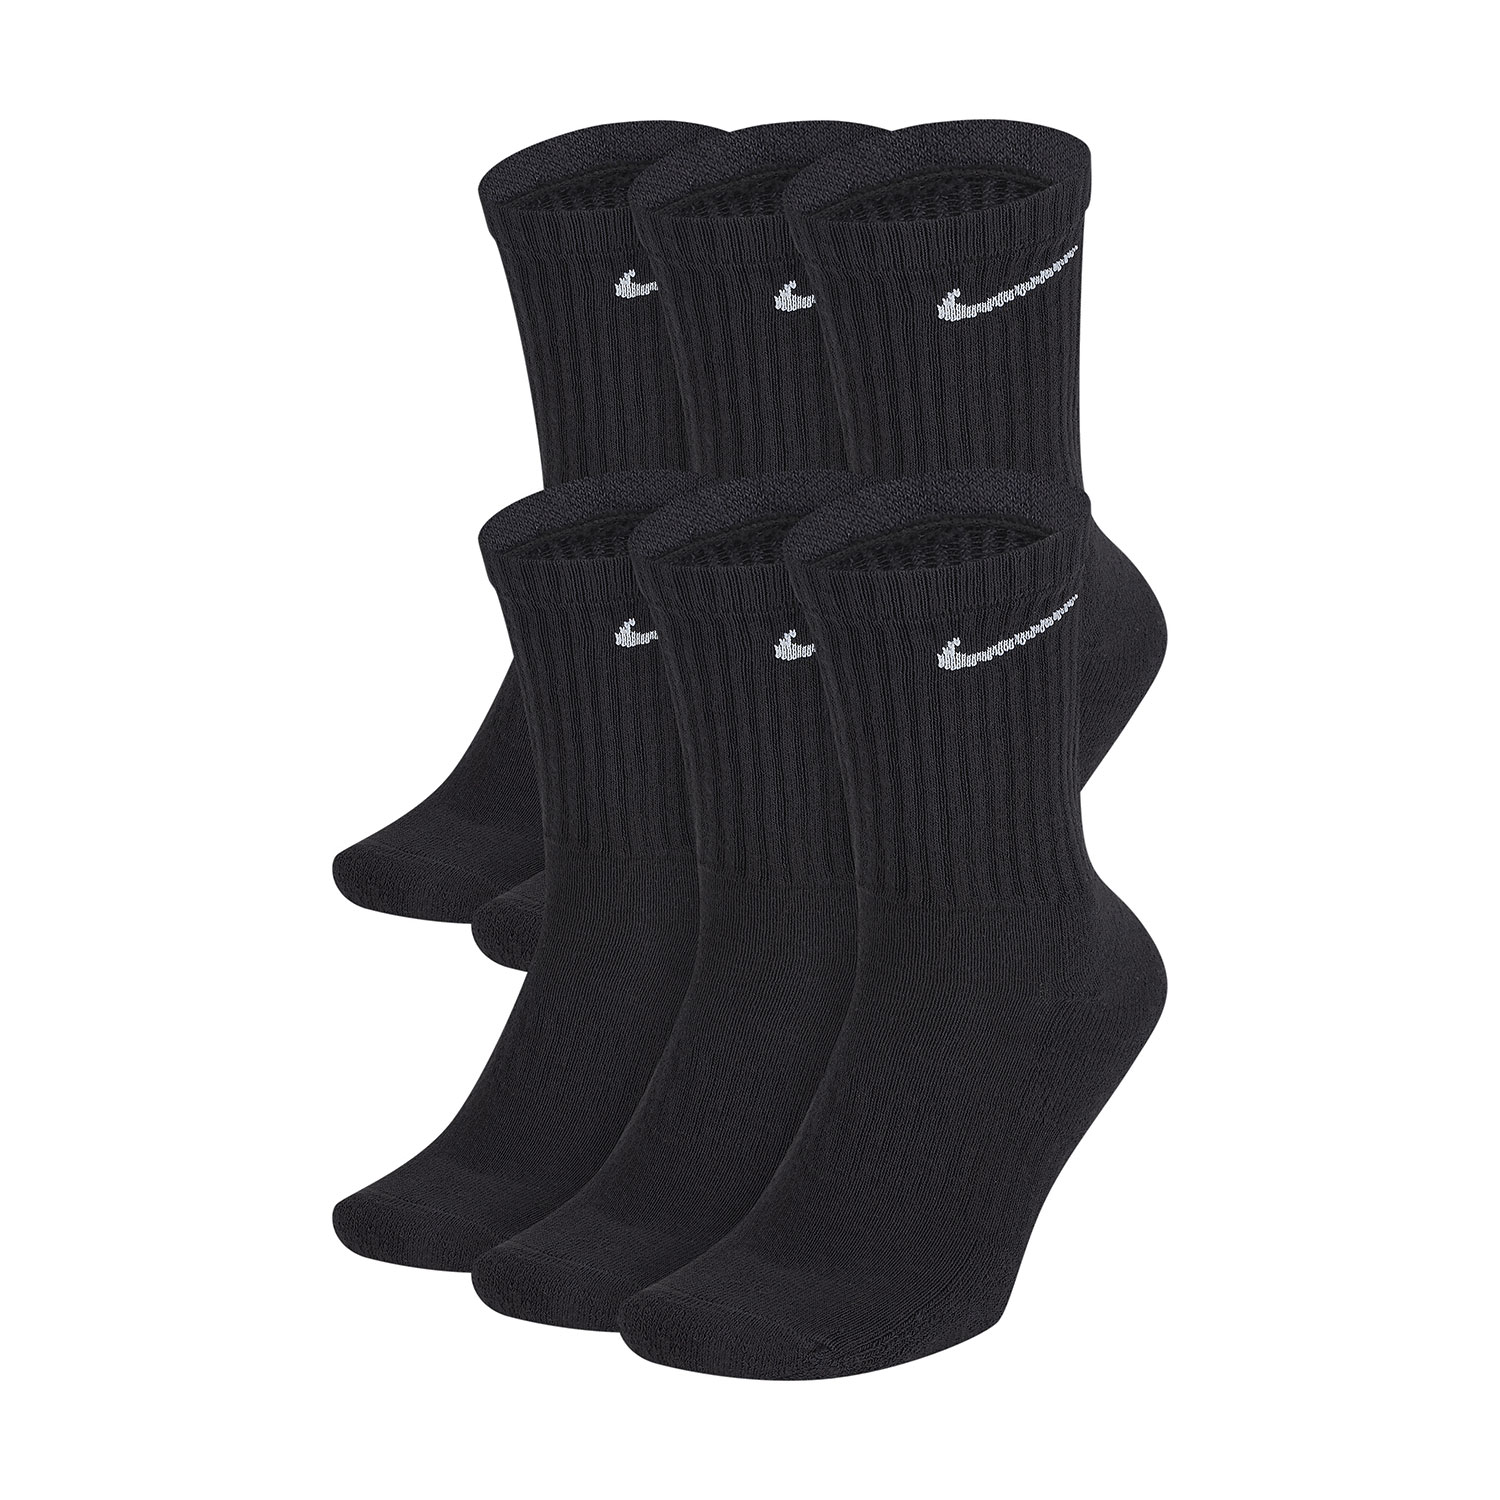 Nike Everyday Cushion Crew x 6 Socks - Black/White